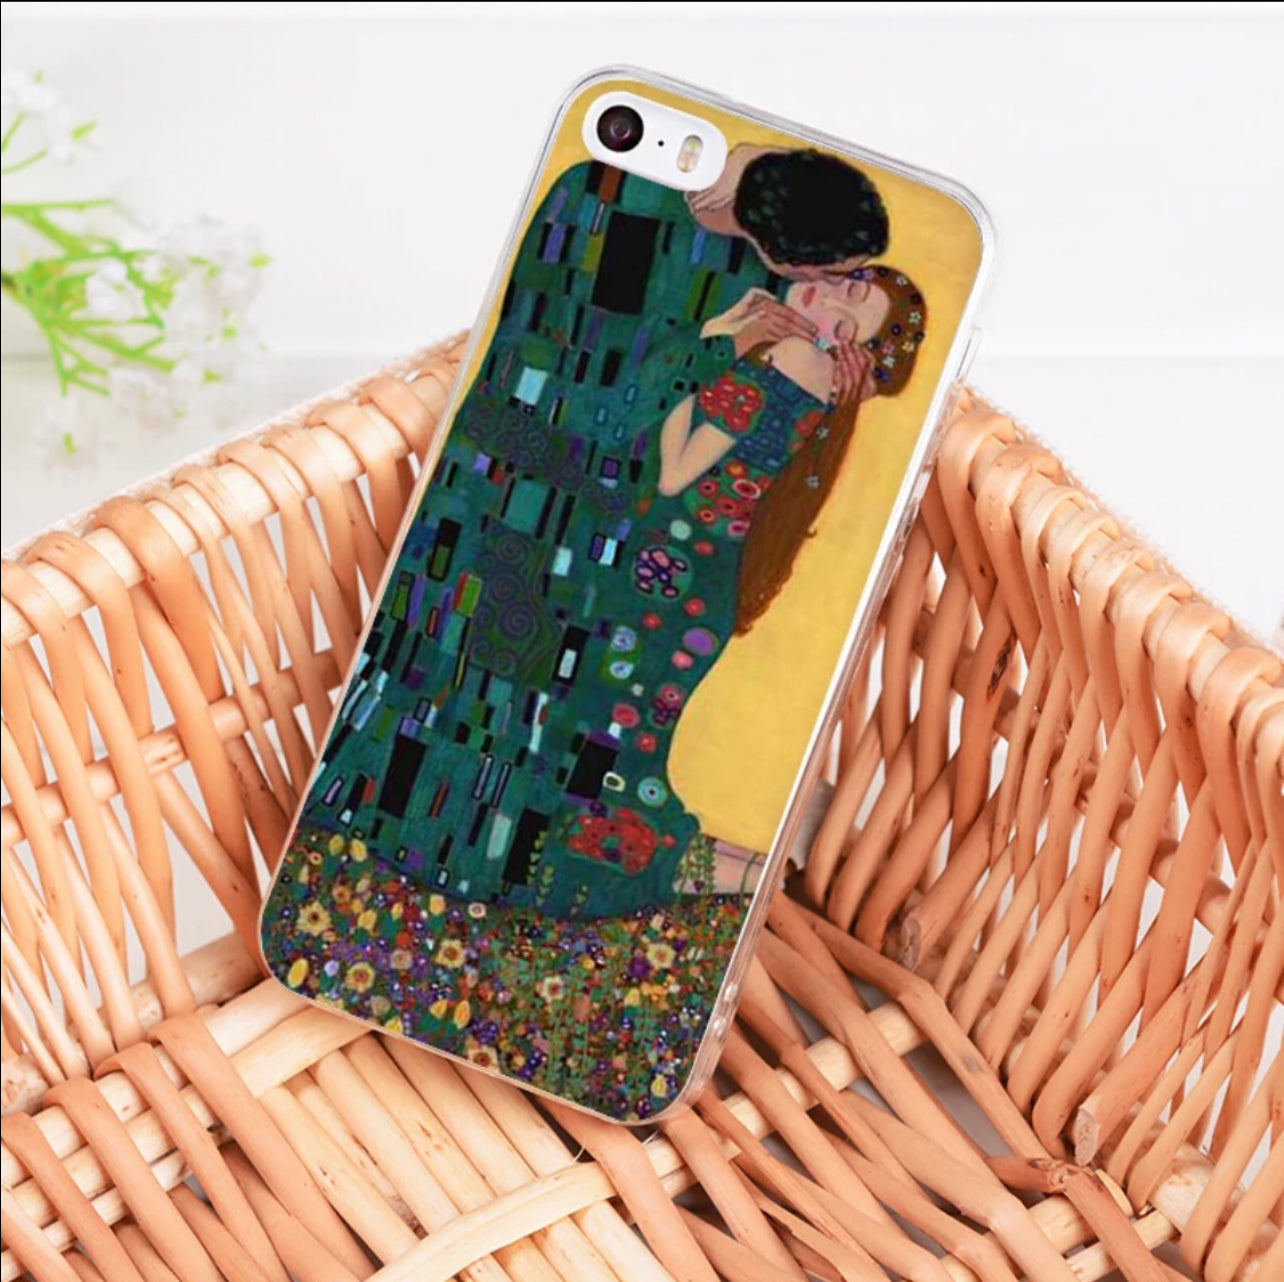 Gustav Klimt “The Kiss” iPhone Case